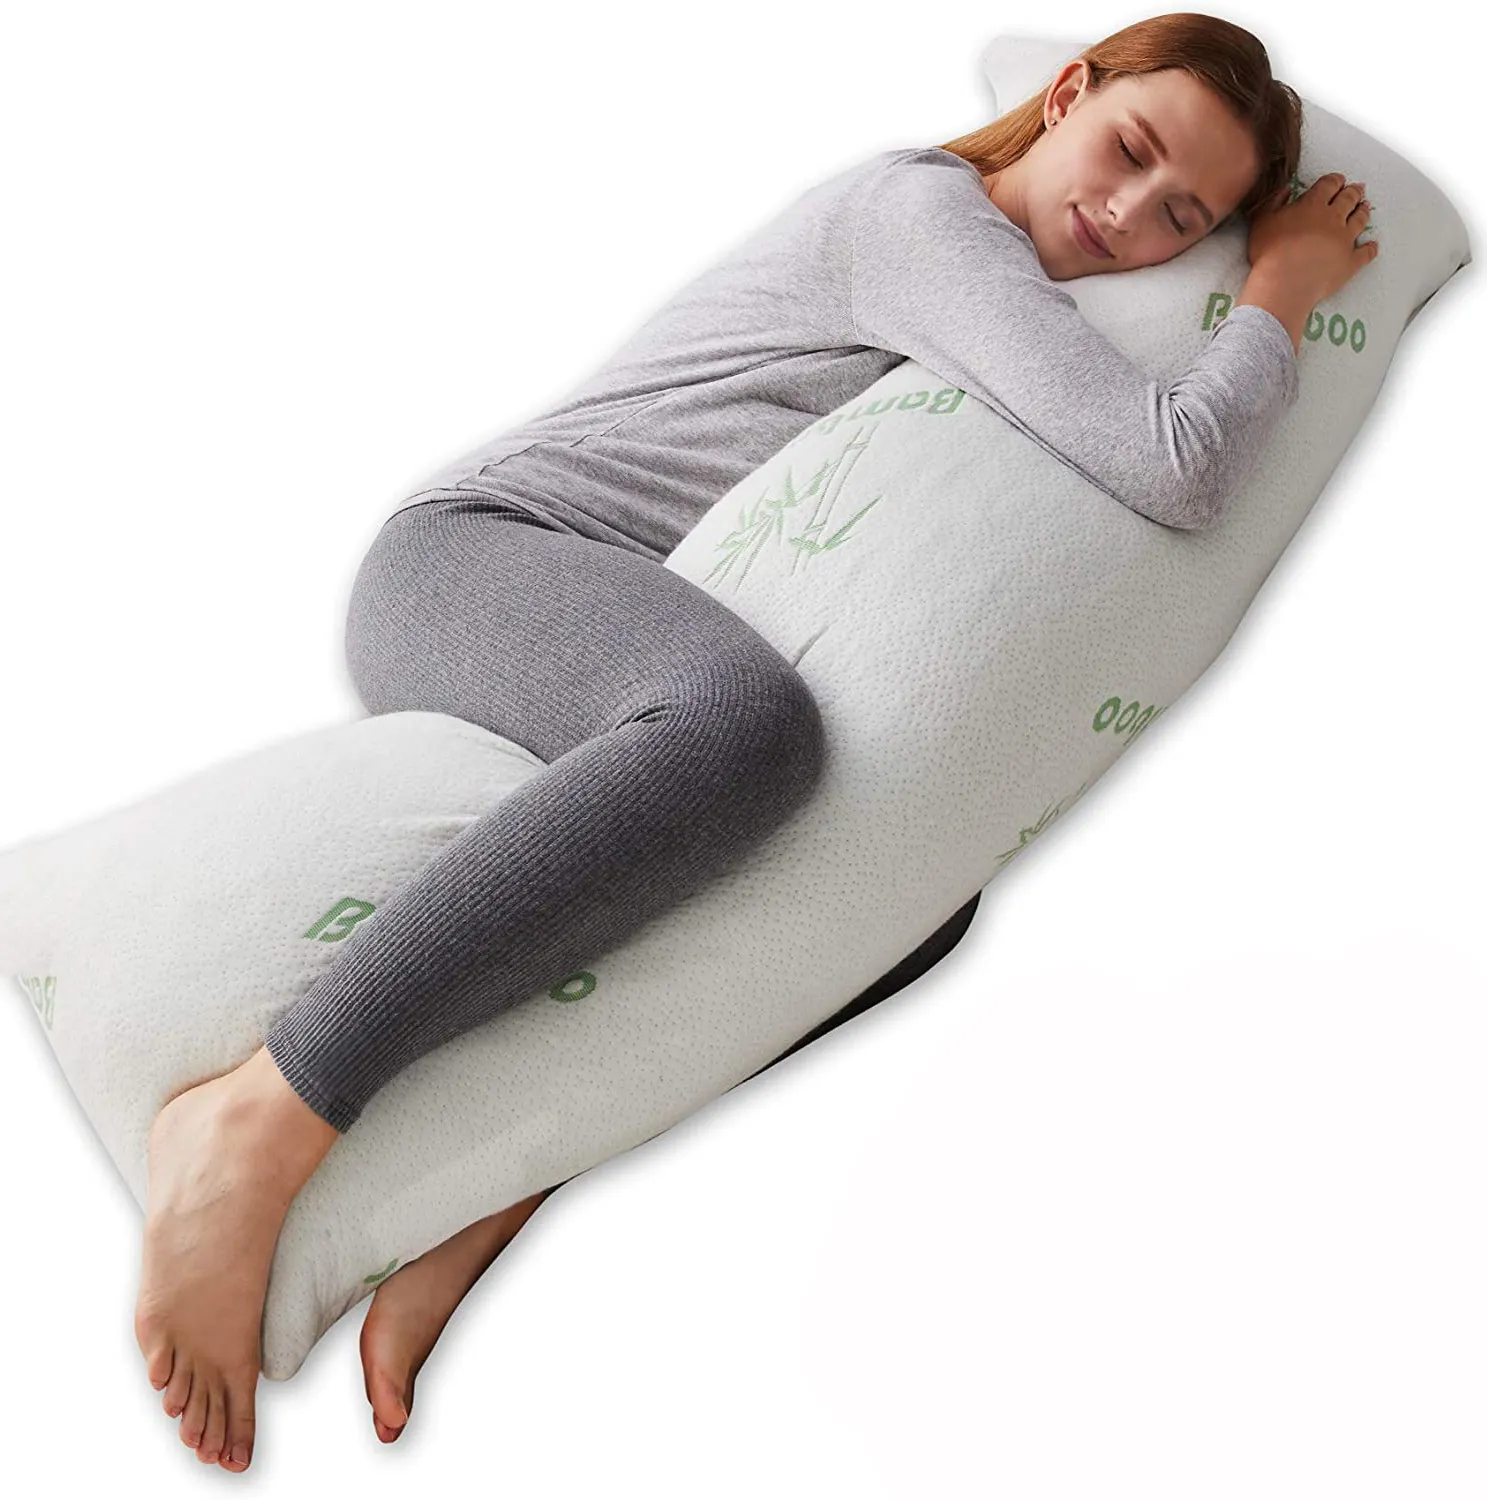 Dakimakura Water Proof Anime Long Full Body Pillowcase Pillow Cover for Pregnancy Bedroom OEM Solid Knitted 14x39inch or Custom